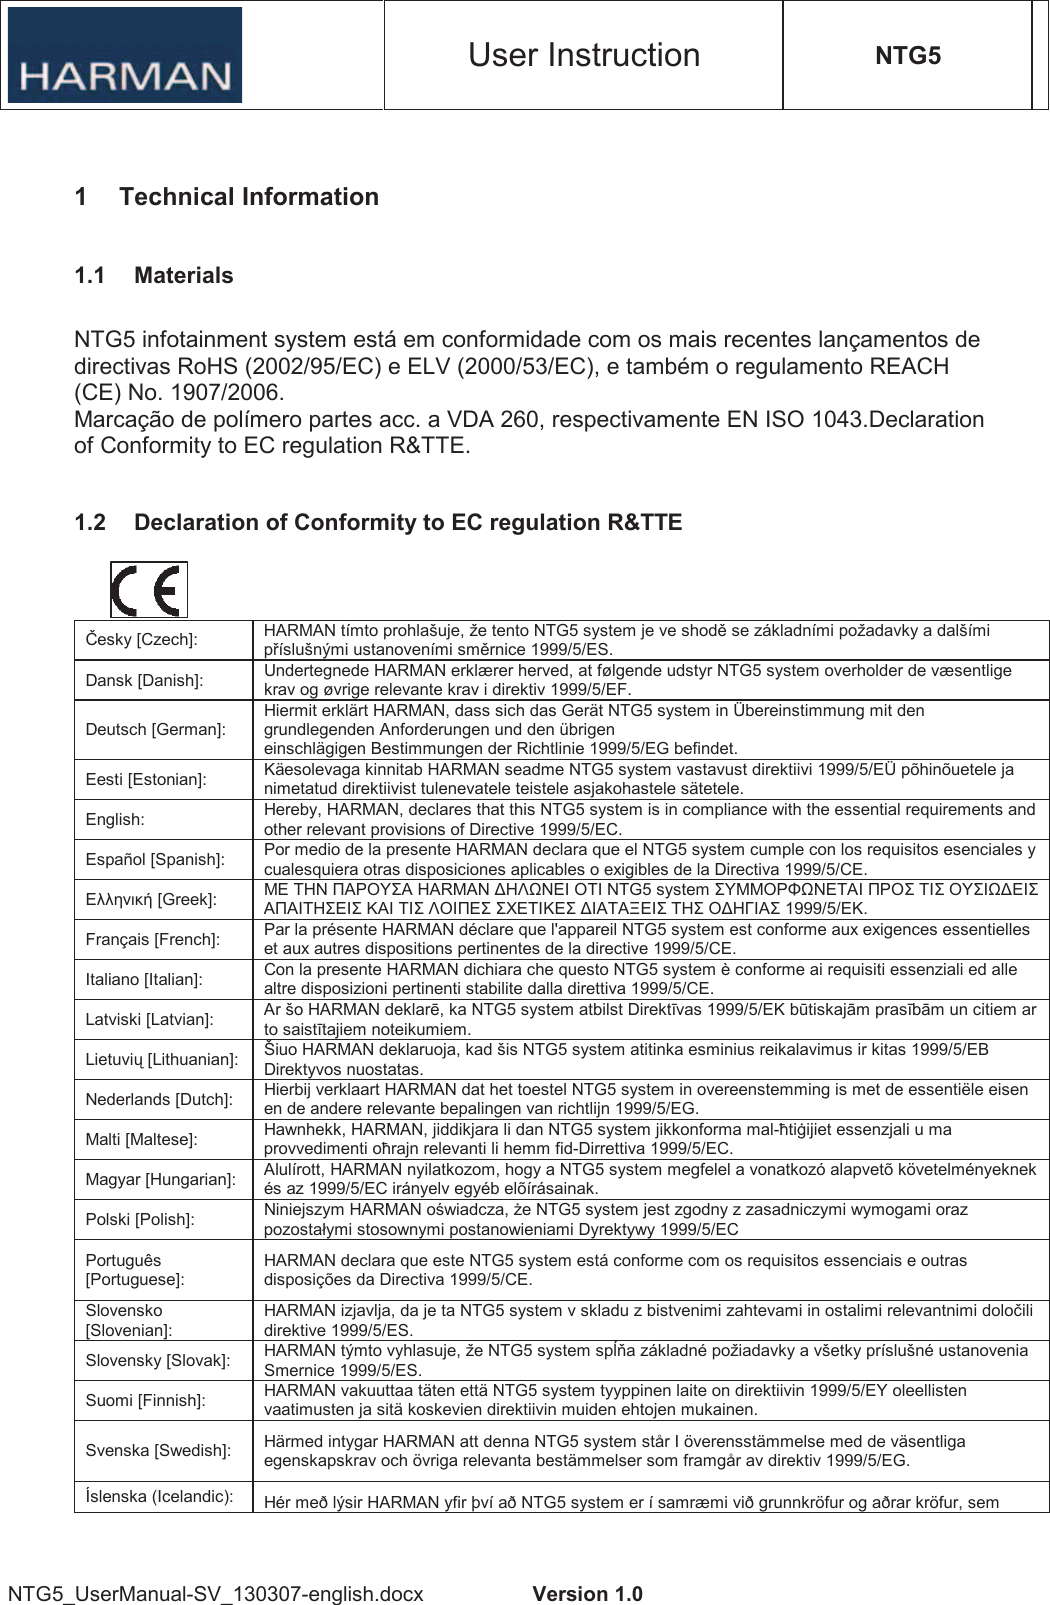 User Instruction NTG5 NTG5_UserManual-SV_130307-english.docx  Version 1.0 1  Technical Information 1.1  Materials NTG5 infotainment system está em conformidade com os mais recentes lançamentos de directivas RoHS (2002/95/EC) e ELV (2000/53/EC), e também o regulamento REACH (CE) No. 1907/2006. Marcação de polímero partes acc. a VDA 260, respectivamente EN ISO 1043.Declaration of Conformity to EC regulation R&amp;TTE. 1.2  Declaration of Conformity to EC regulation R&amp;TTE esky [Czech]:  HARMAN tímto prohlašuje, že tento NTG5 system je ve shod se základními požadavky a dalšími píslušnými ustanoveními smrnice 1999/5/ES. Dansk [Danish]:  Undertegnede HARMAN erklærer herved, at følgende udstyr NTG5 system overholder de væsentlige krav og øvrige relevante krav i direktiv 1999/5/EF. Deutsch [German]: Hiermit erklärt HARMAN, dass sich das Gerät NTG5 system in Übereinstimmung mit den grundlegenden Anforderungen und den übrigen einschlägigen Bestimmungen der Richtlinie 1999/5/EG befindet. Eesti [Estonian]:  Käesolevaga kinnitab HARMAN seadme NTG5 system vastavust direktiivi 1999/5/EÜ põhinõuetele ja nimetatud direktiivist tulenevatele teistele asjakohastele sätetele. English:  Hereby, HARMAN, declares that this NTG5 system is in compliance with the essential requirements and other relevant provisions of Directive 1999/5/EC. Español [Spanish]:  Por medio de la presente HARMAN declara que el NTG5 system cumple con los requisitos esenciales y cualesquiera otras disposiciones aplicables o exigibles de la Directiva 1999/5/CE.  [Greek]:     HARMAN   NTG5 system            1999/5/. Français [French]:  Par la présente HARMAN déclare que l&apos;appareil NTG5 system est conforme aux exigences essentielles et aux autres dispositions pertinentes de la directive 1999/5/CE. Italiano [Italian]:  Con la presente HARMAN dichiara che questo NTG5 system è conforme ai requisiti essenziali ed alle altre disposizioni pertinenti stabilite dalla direttiva 1999/5/CE. Latviski [Latvian]:  Ar šo HARMAN deklar, ka NTG5 system atbilst Direktvas 1999/5/EK b tiskaj!m prasb!m un citiem ar to saisttajiem noteikumiem. Lietuvi&quot; [Lithuanian]:  Šiuo HARMAN deklaruoja, kad šis NTG5 system atitinka esminius reikalavimus ir kitas 1999/5/EB Direktyvos nuostatas. Nederlands [Dutch]:  Hierbij verklaart HARMAN dat het toestel NTG5 system in overeenstemming is met de essentiële eisen en de andere relevante bepalingen van richtlijn 1999/5/EG. Malti [Maltese]:  Hawnhekk, HARMAN, jiddikjara li dan NTG5 system jikkonforma mal-#ti$ijiet essenzjali u ma provvedimenti o#rajn relevanti li hemm fid-Dirrettiva 1999/5/EC. Magyar [Hungarian]:  Alulírott, HARMAN nyilatkozom, hogy a NTG5 system megfelel a vonatkozó alapvetõ követelményeknek és az 1999/5/EC irányelv egyéb elõírásainak. Polski [Polish]:  Niniejszym HARMAN o%wiadcza, &amp;e NTG5 system jest zgodny z zasadniczymi wymogami oraz pozostałymi stosownymi postanowieniami Dyrektywy 1999/5/EC Português [Portuguese]: HARMAN declara que este NTG5 system está conforme com os requisitos essenciais e outras disposições da Directiva 1999/5/CE. Slovensko [Slovenian]: HARMAN izjavlja, da je ta NTG5 system v skladu z bistvenimi zahtevami in ostalimi relevantnimi dolo&apos;ili direktive 1999/5/ES. Slovensky [Slovak]:  HARMAN týmto vyhlasuje, že NTG5 system sp()a základné požiadavky a všetky príslušné ustanovenia Smernice 1999/5/ES. Suomi [Finnish]:  HARMAN vakuuttaa täten että NTG5 system tyyppinen laite on direktiivin 1999/5/EY oleellisten vaatimusten ja sitä koskevien direktiivin muiden ehtojen mukainen. Svenska [Swedish]:  Härmed intygar HARMAN att denna NTG5 system står I överensstämmelse med de väsentliga egenskapskrav och övriga relevanta bestämmelser som framgår av direktiv 1999/5/EG. Íslenska (Icelandic):  Hér með lýsir HARMAN yfir því að NTG5 system er í samræmi við grunnkröfur og aðrar kröfur, sem 